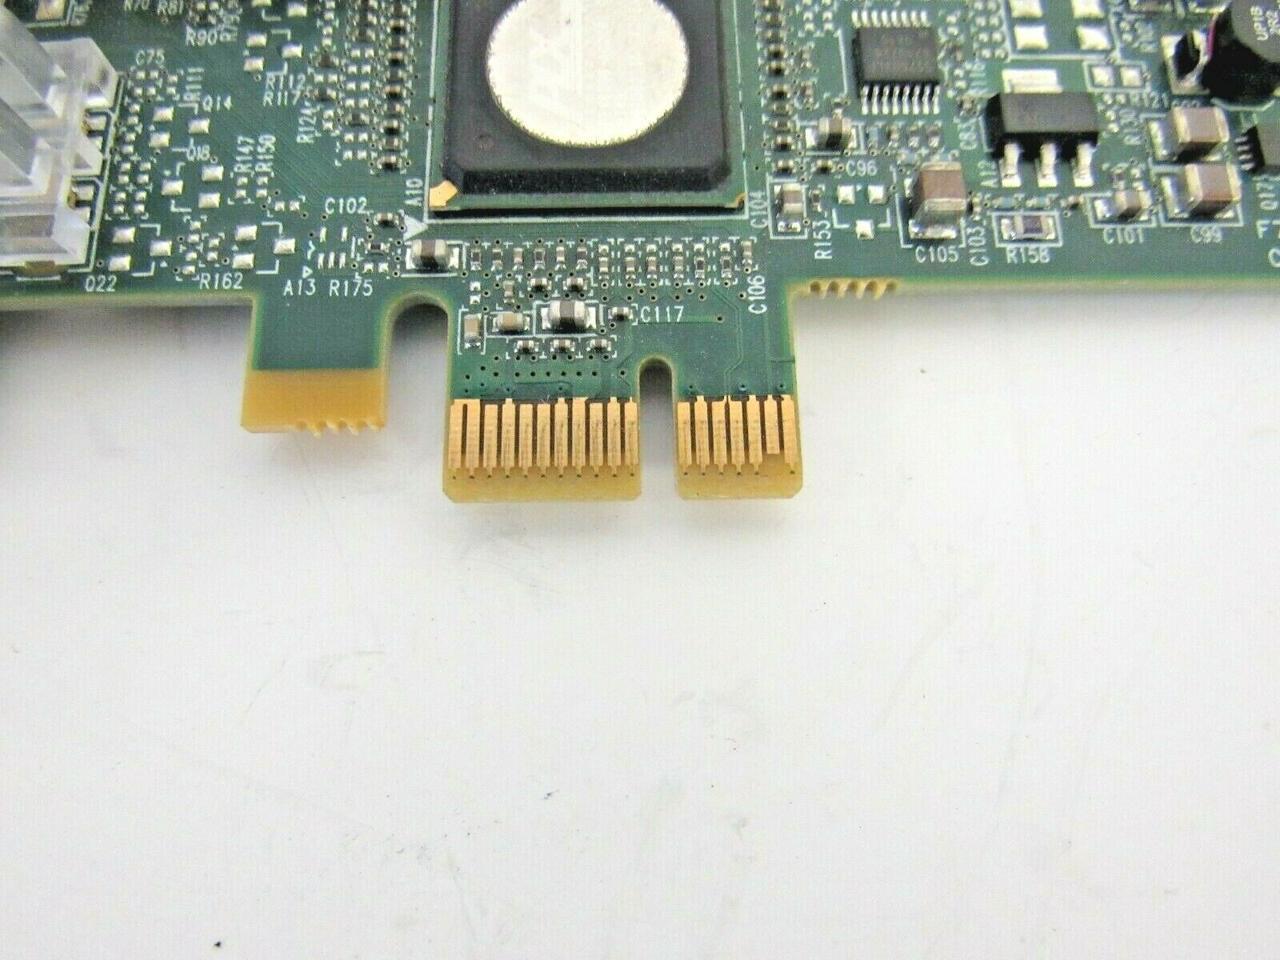 LOT OF 4 MATROX F7301-0001 MGI XTOA-FESLPAF FIBRE OPTIC PCIe INTERFACE CARDS 